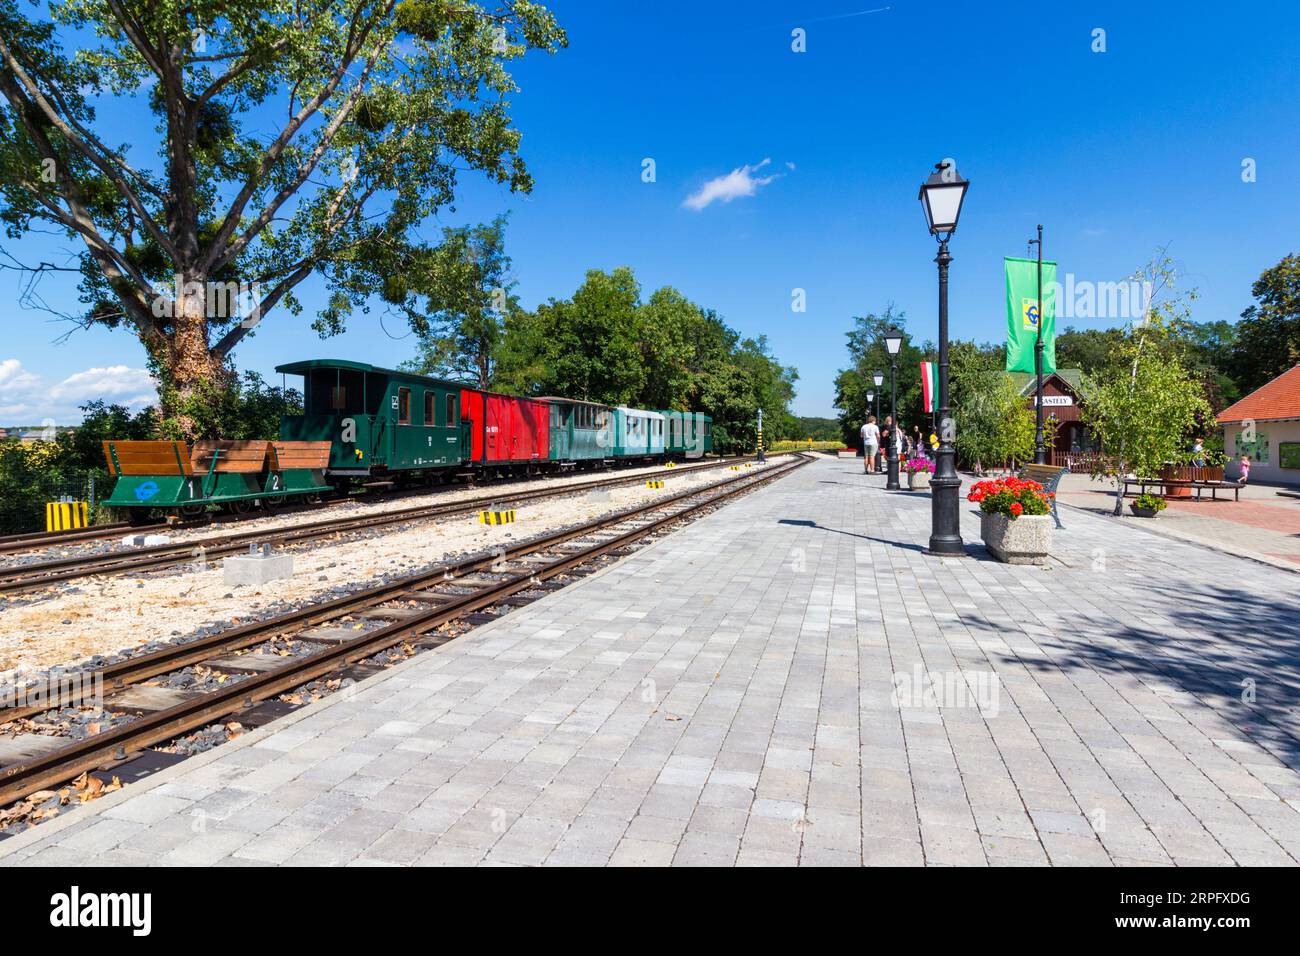 Nagycenki Szechenyi Muzeumvasut, ferrovia a scartamento ridotto, stazione di Kastely con diverse carrozze storiche in mostra, Nagycenk, Ungheria Foto Stock